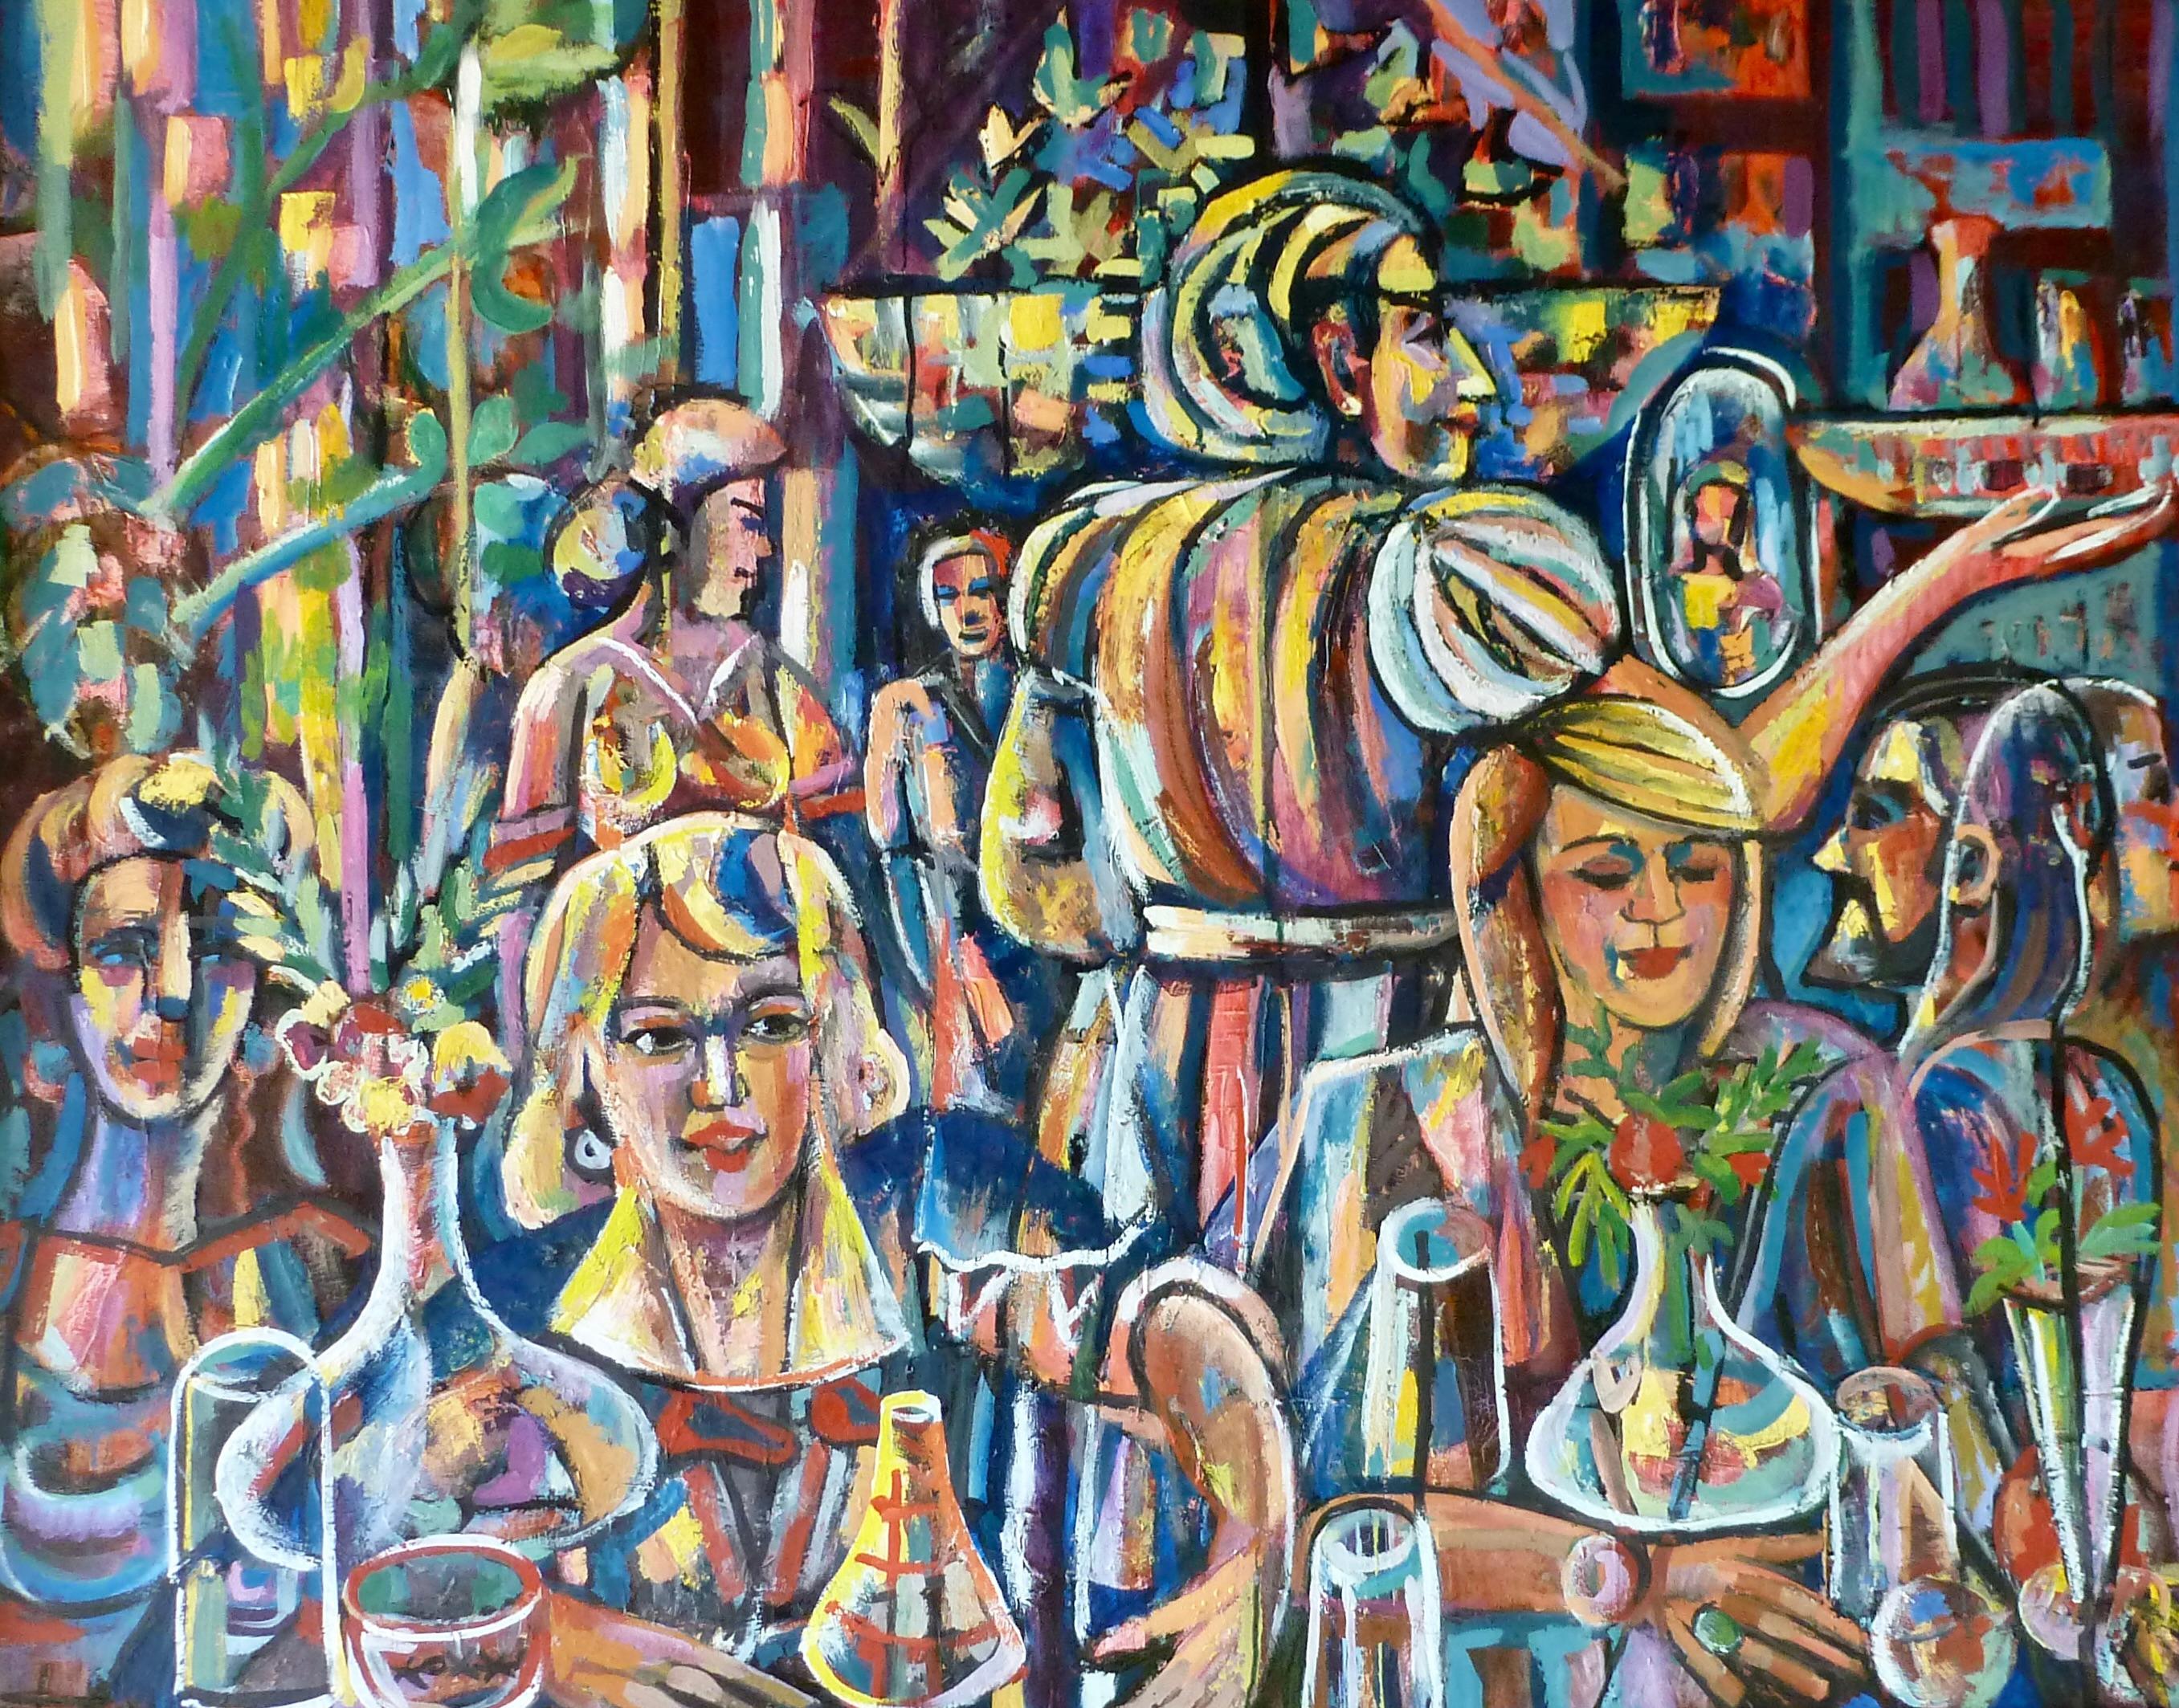 Vatche Geuvdjelian  Figurative Painting – AT THE SANBORN'S CAFE 2021 farbenfrohes Ölgemälde/Leinwand Damen- und Barszene Armenische Künstlerin